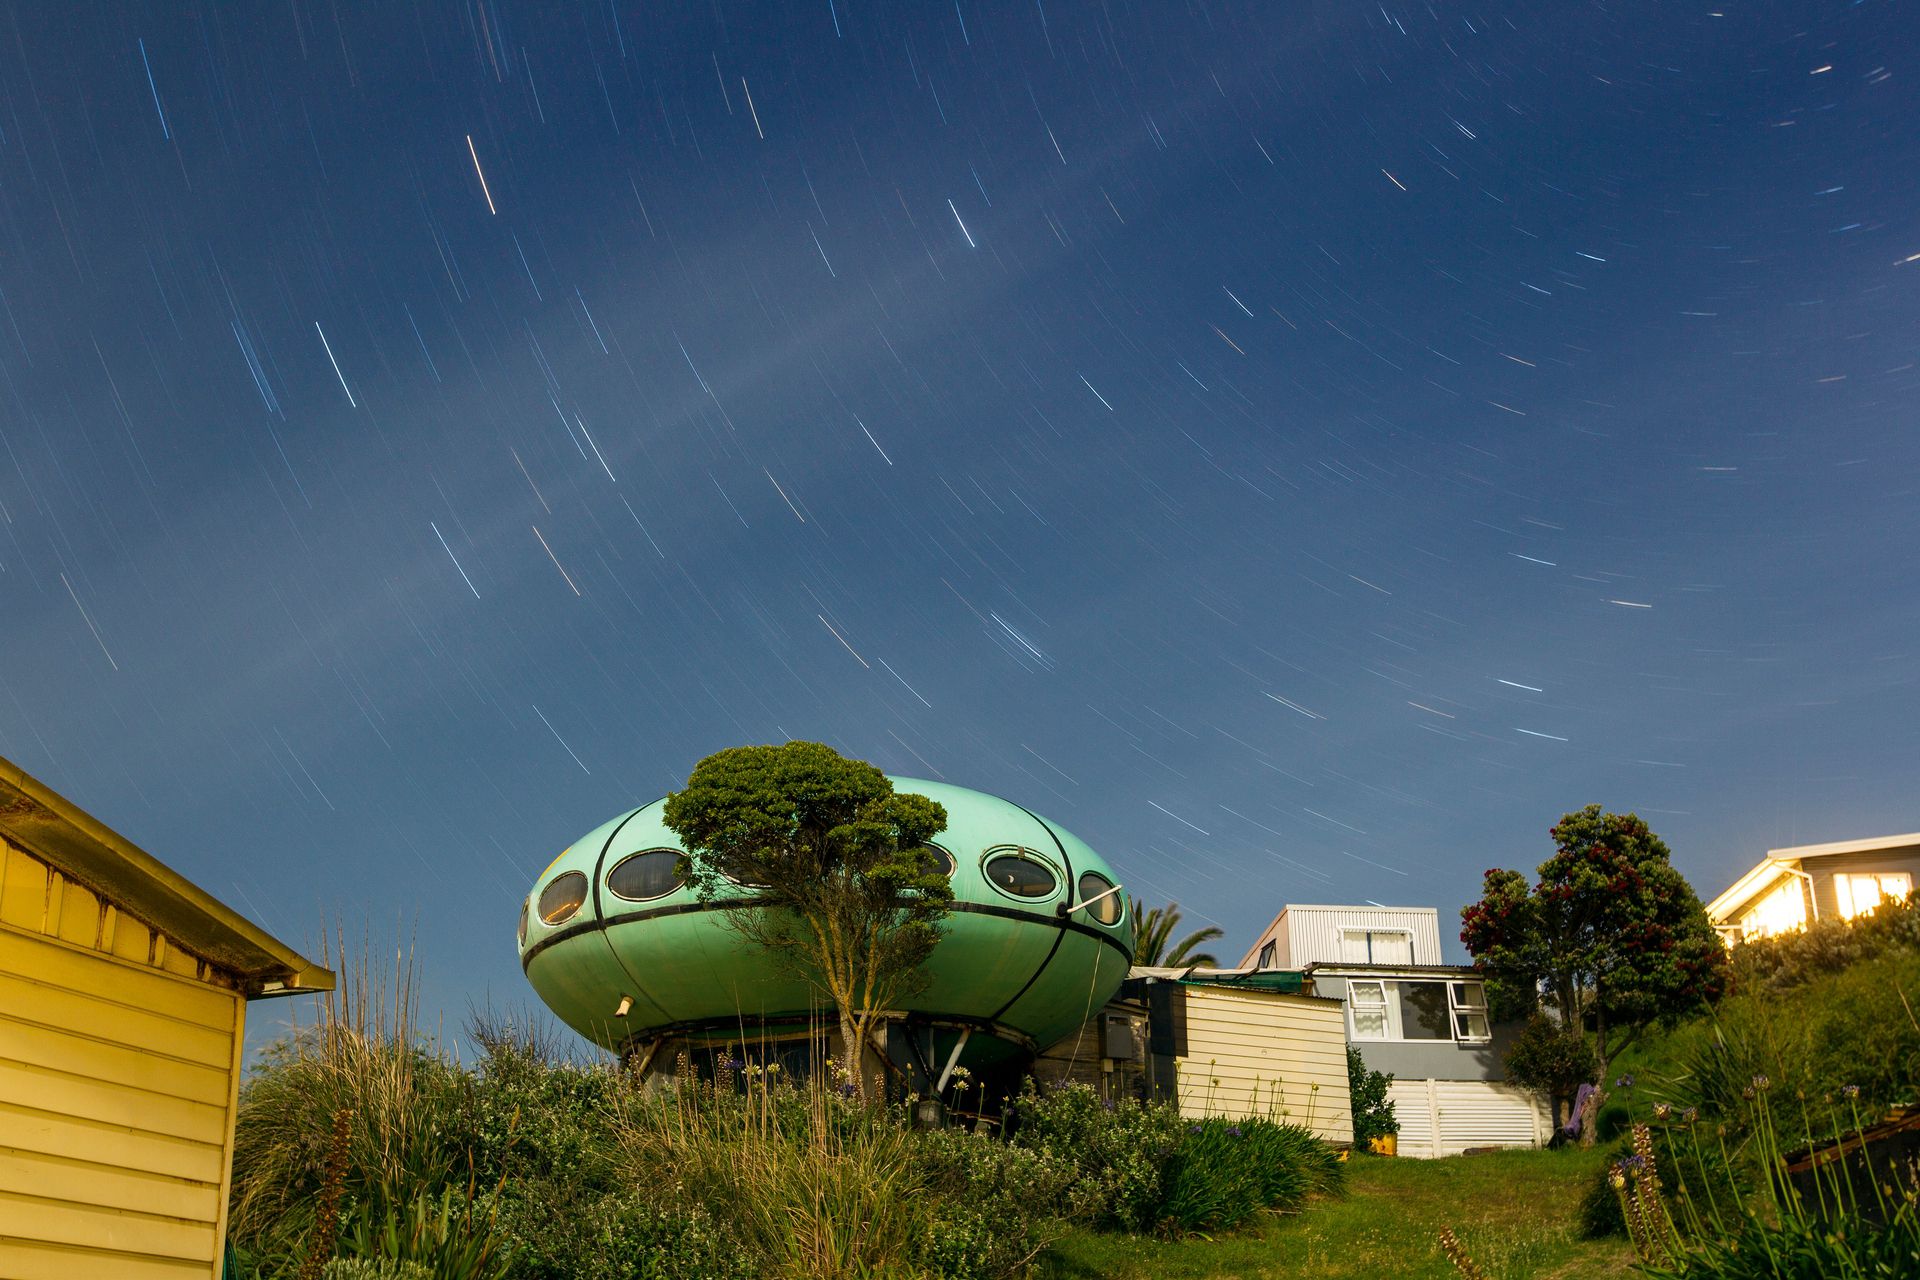 Spaceship home flies off to explore southern frontier - NZ Herald